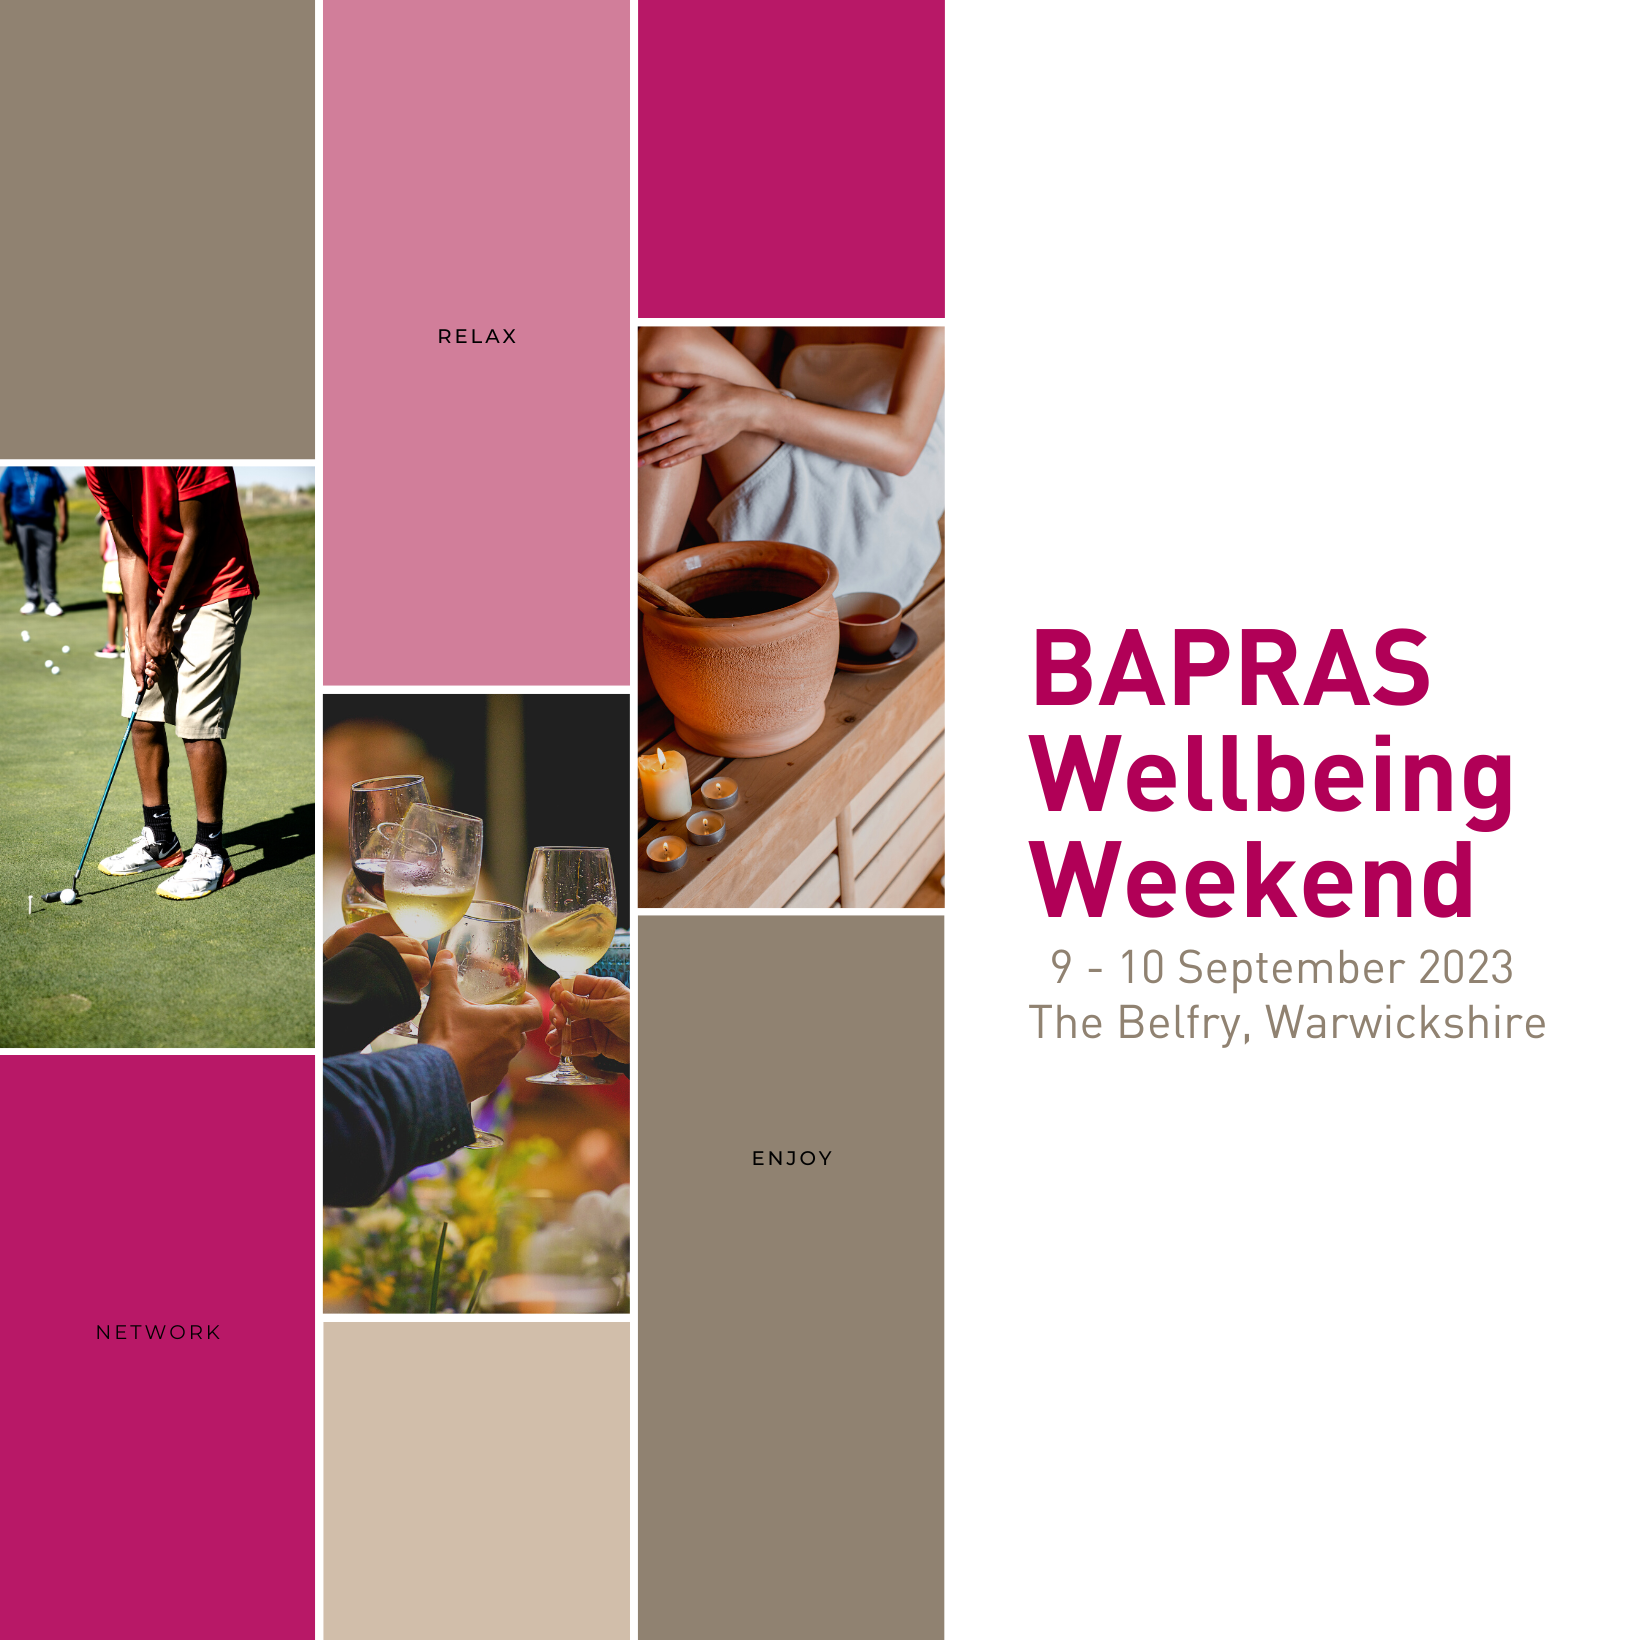 BAPRAS Wellbeing Weekend 